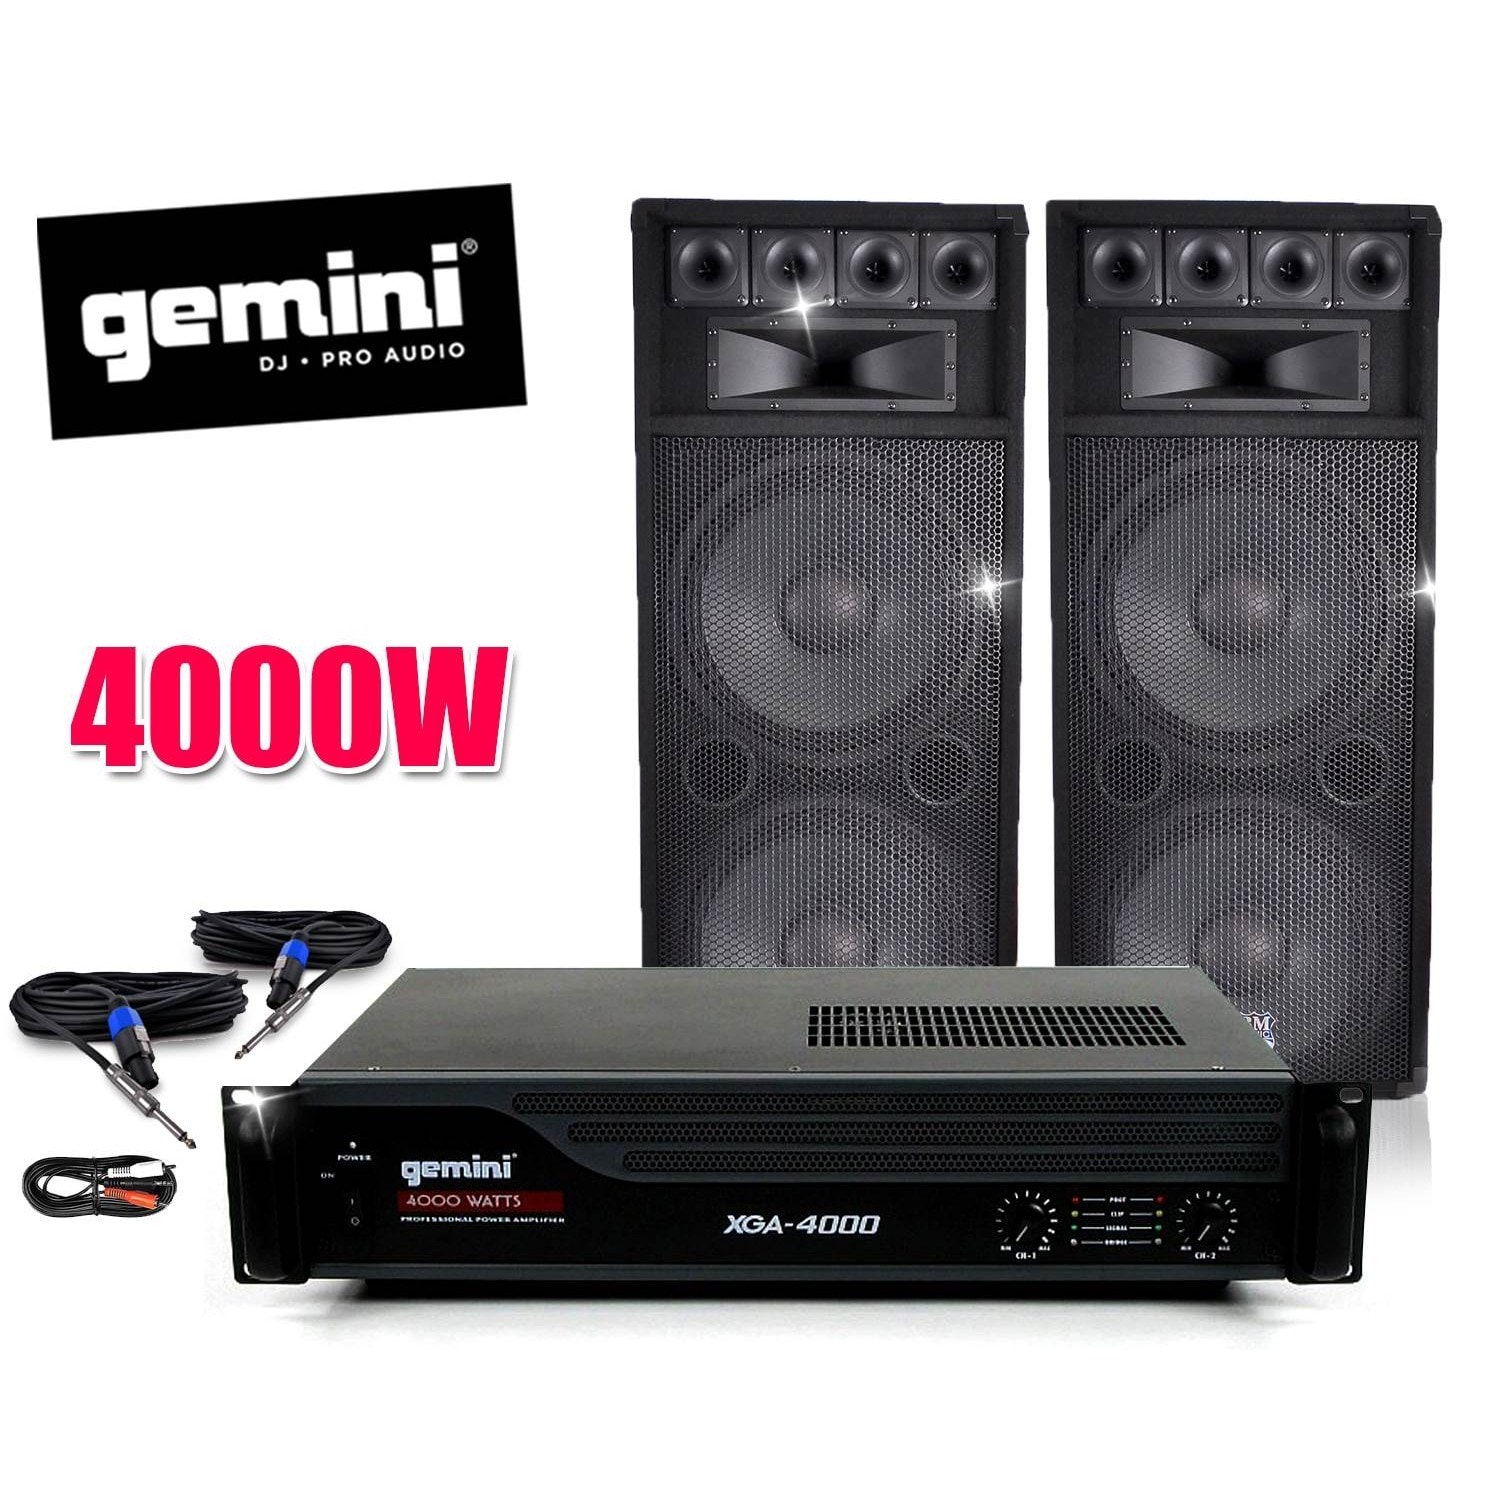 Pack SONO Dj complet avec AMPLI GEMINI 4000W + Enceintes BM Sonic